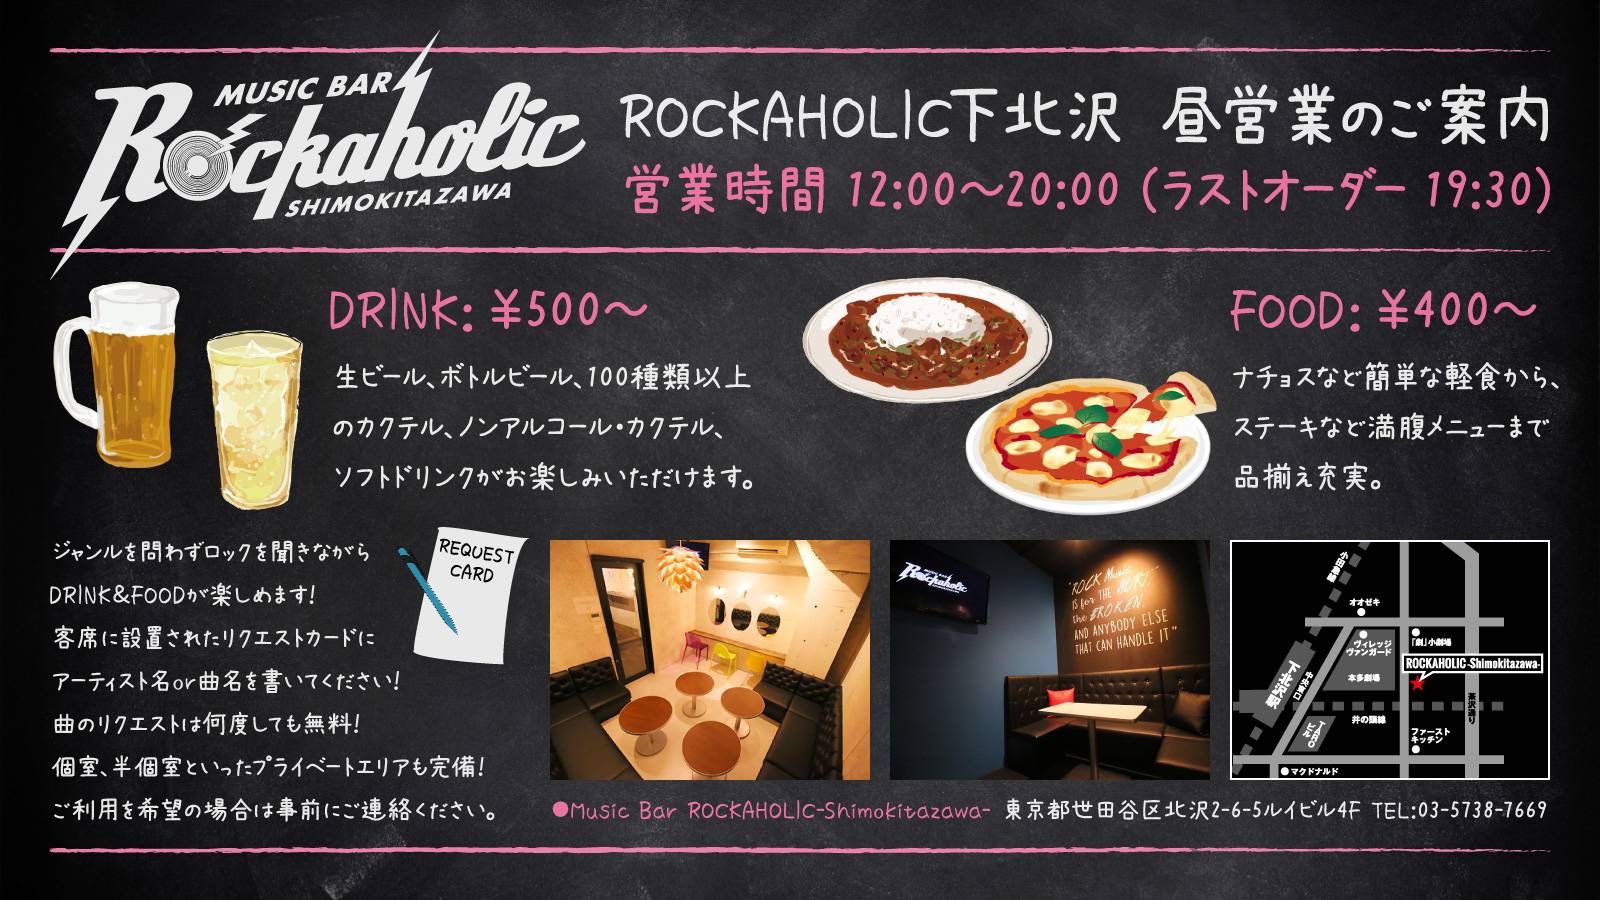 https://bar-rockaholic.jp/shibuya/blog/BE0C02A6-4FBD-4A20-B8D1-B5859E3CDBE2.jpeg